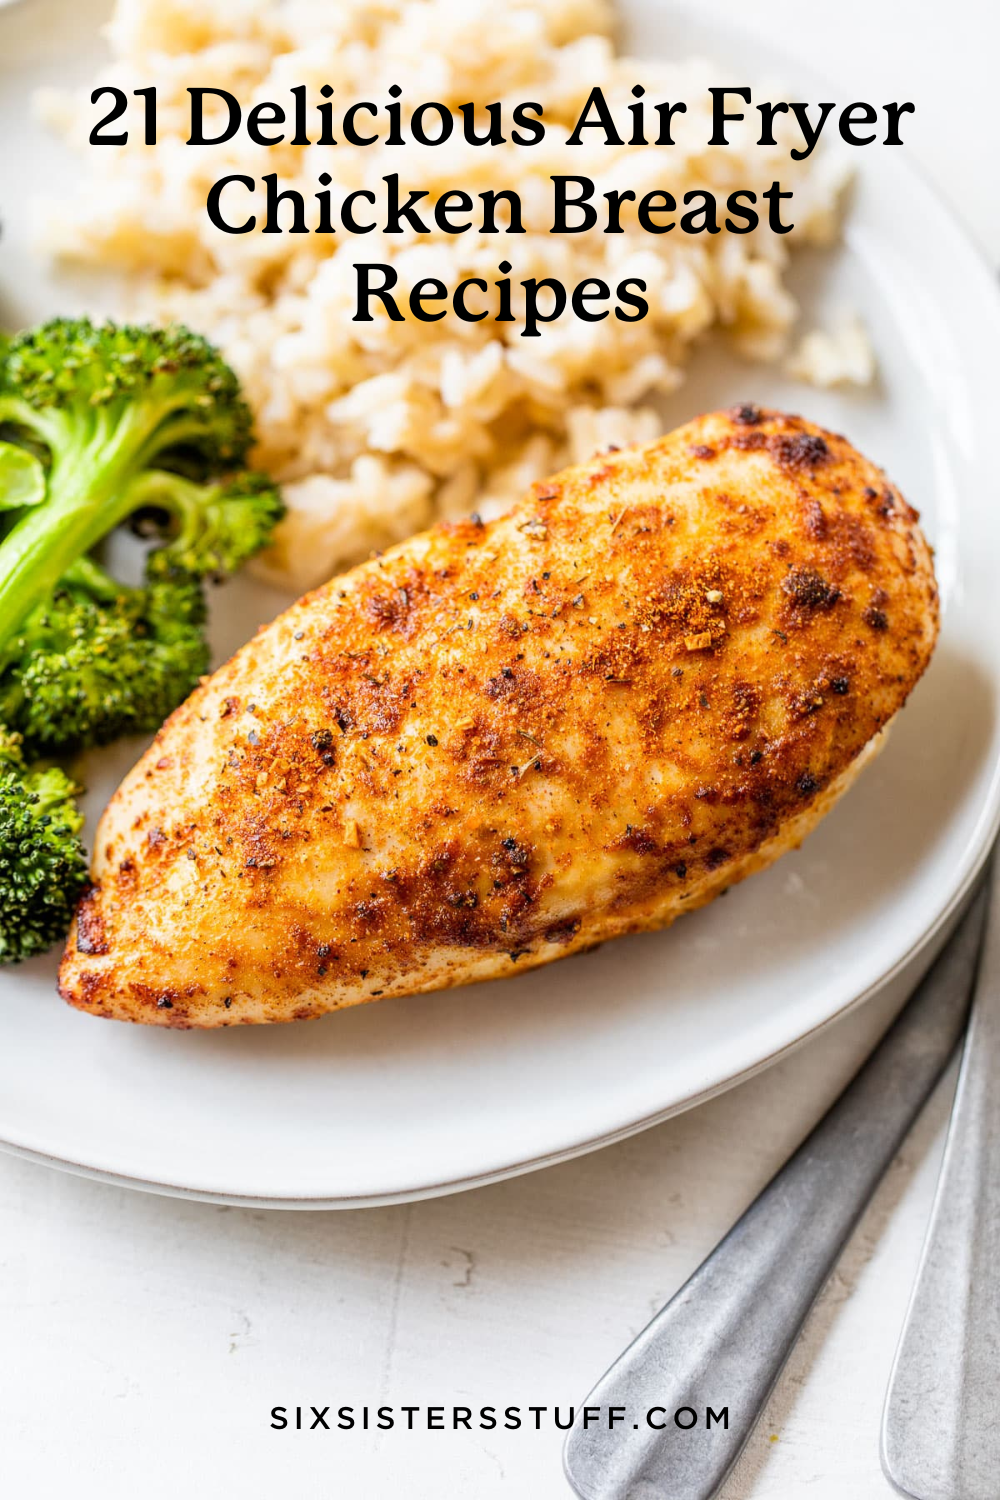 21 Delicious Air Fryer Chicken Breast Recipes